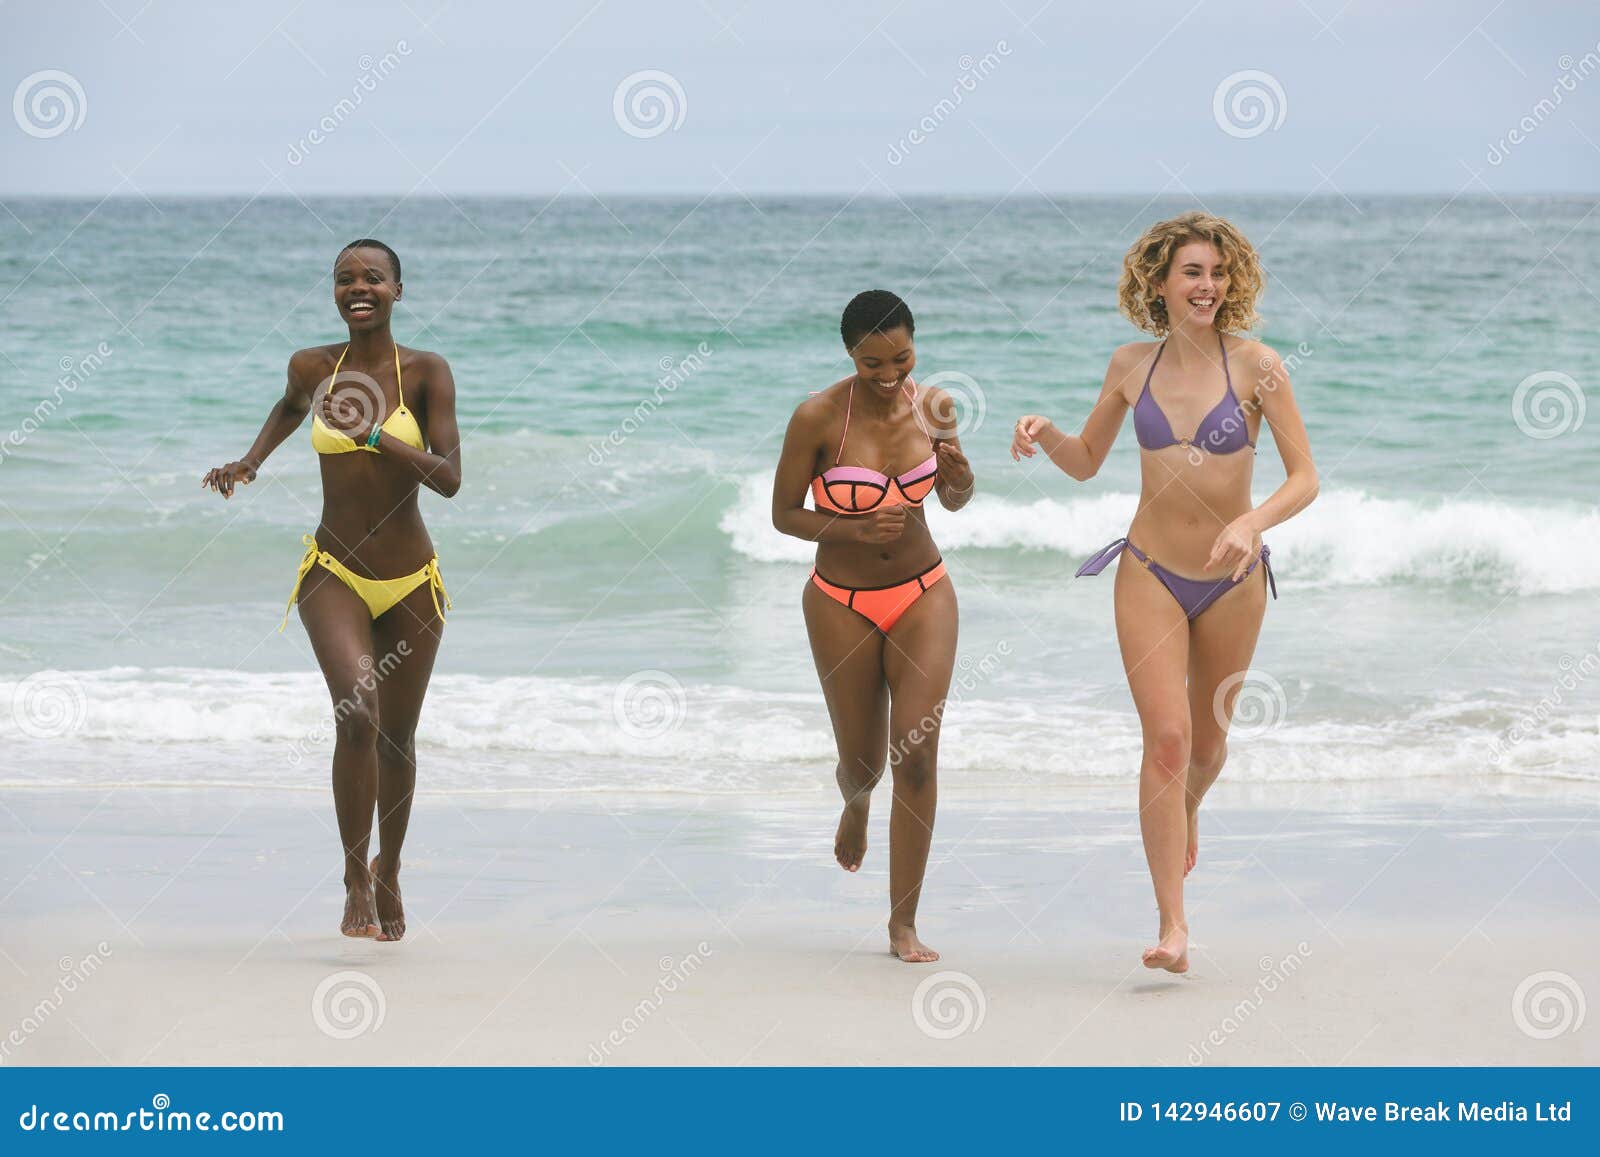 Women With Bikini Enjoying On Beach Stock Image Image Of Black